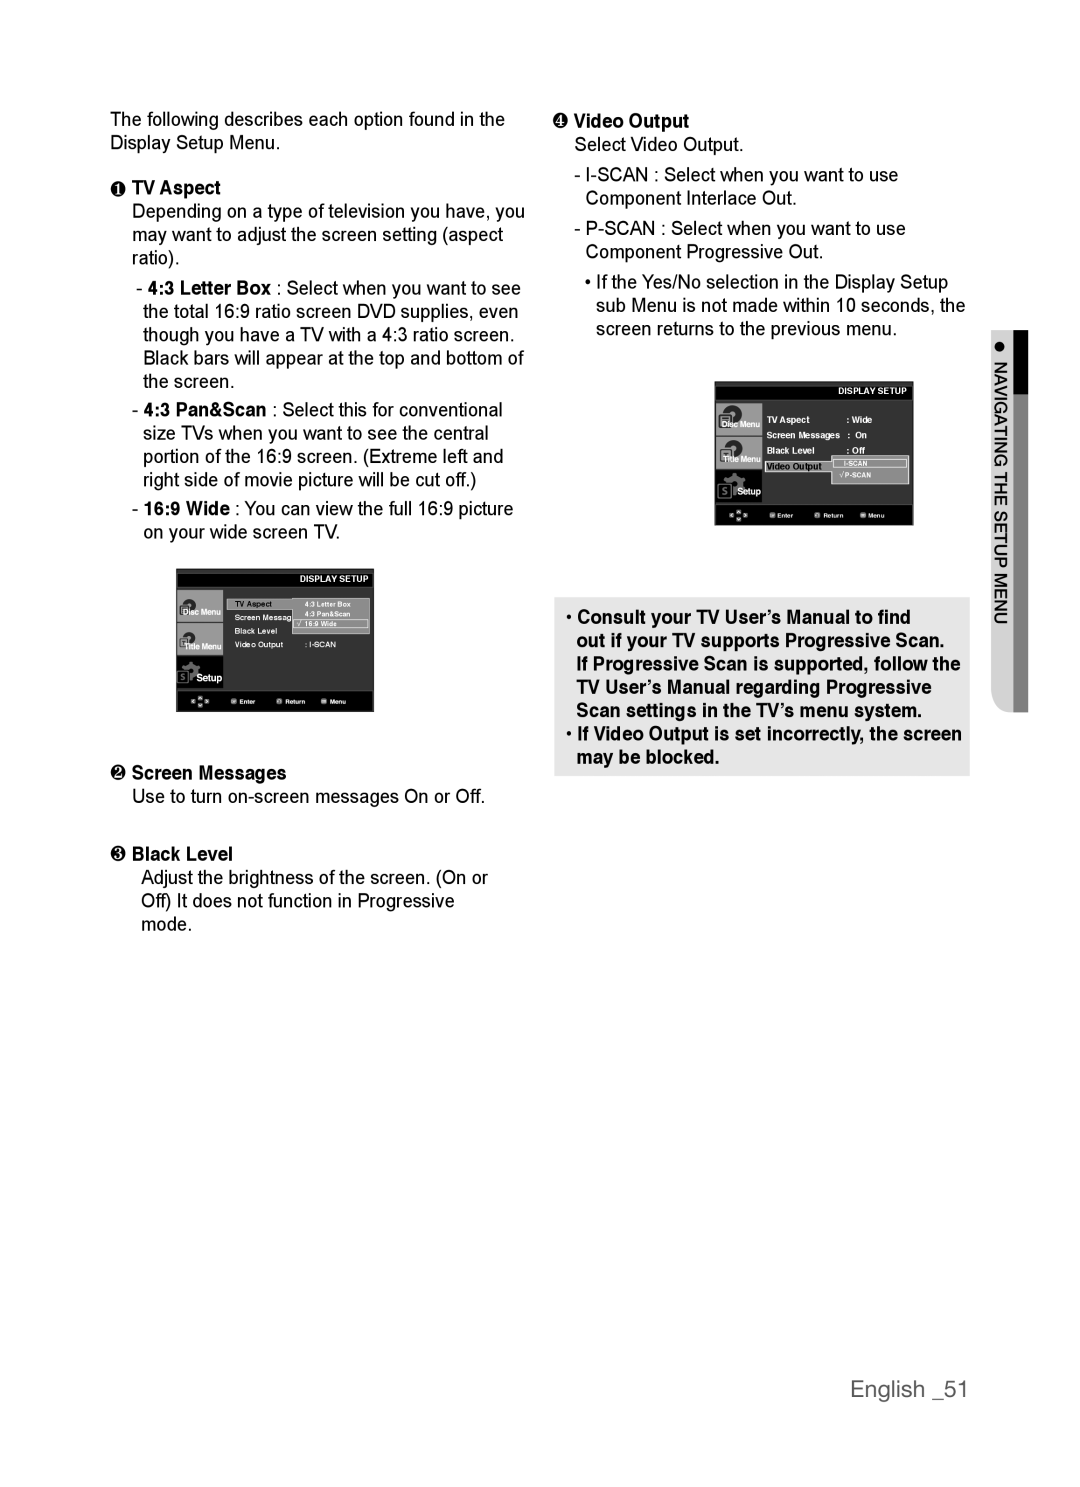 Samsung AK68-01770G, DVD-P390 user manual ❶ TV Aspect, ❷ Screen Messages, ❸ Black Level, ❹ Video Output, English 